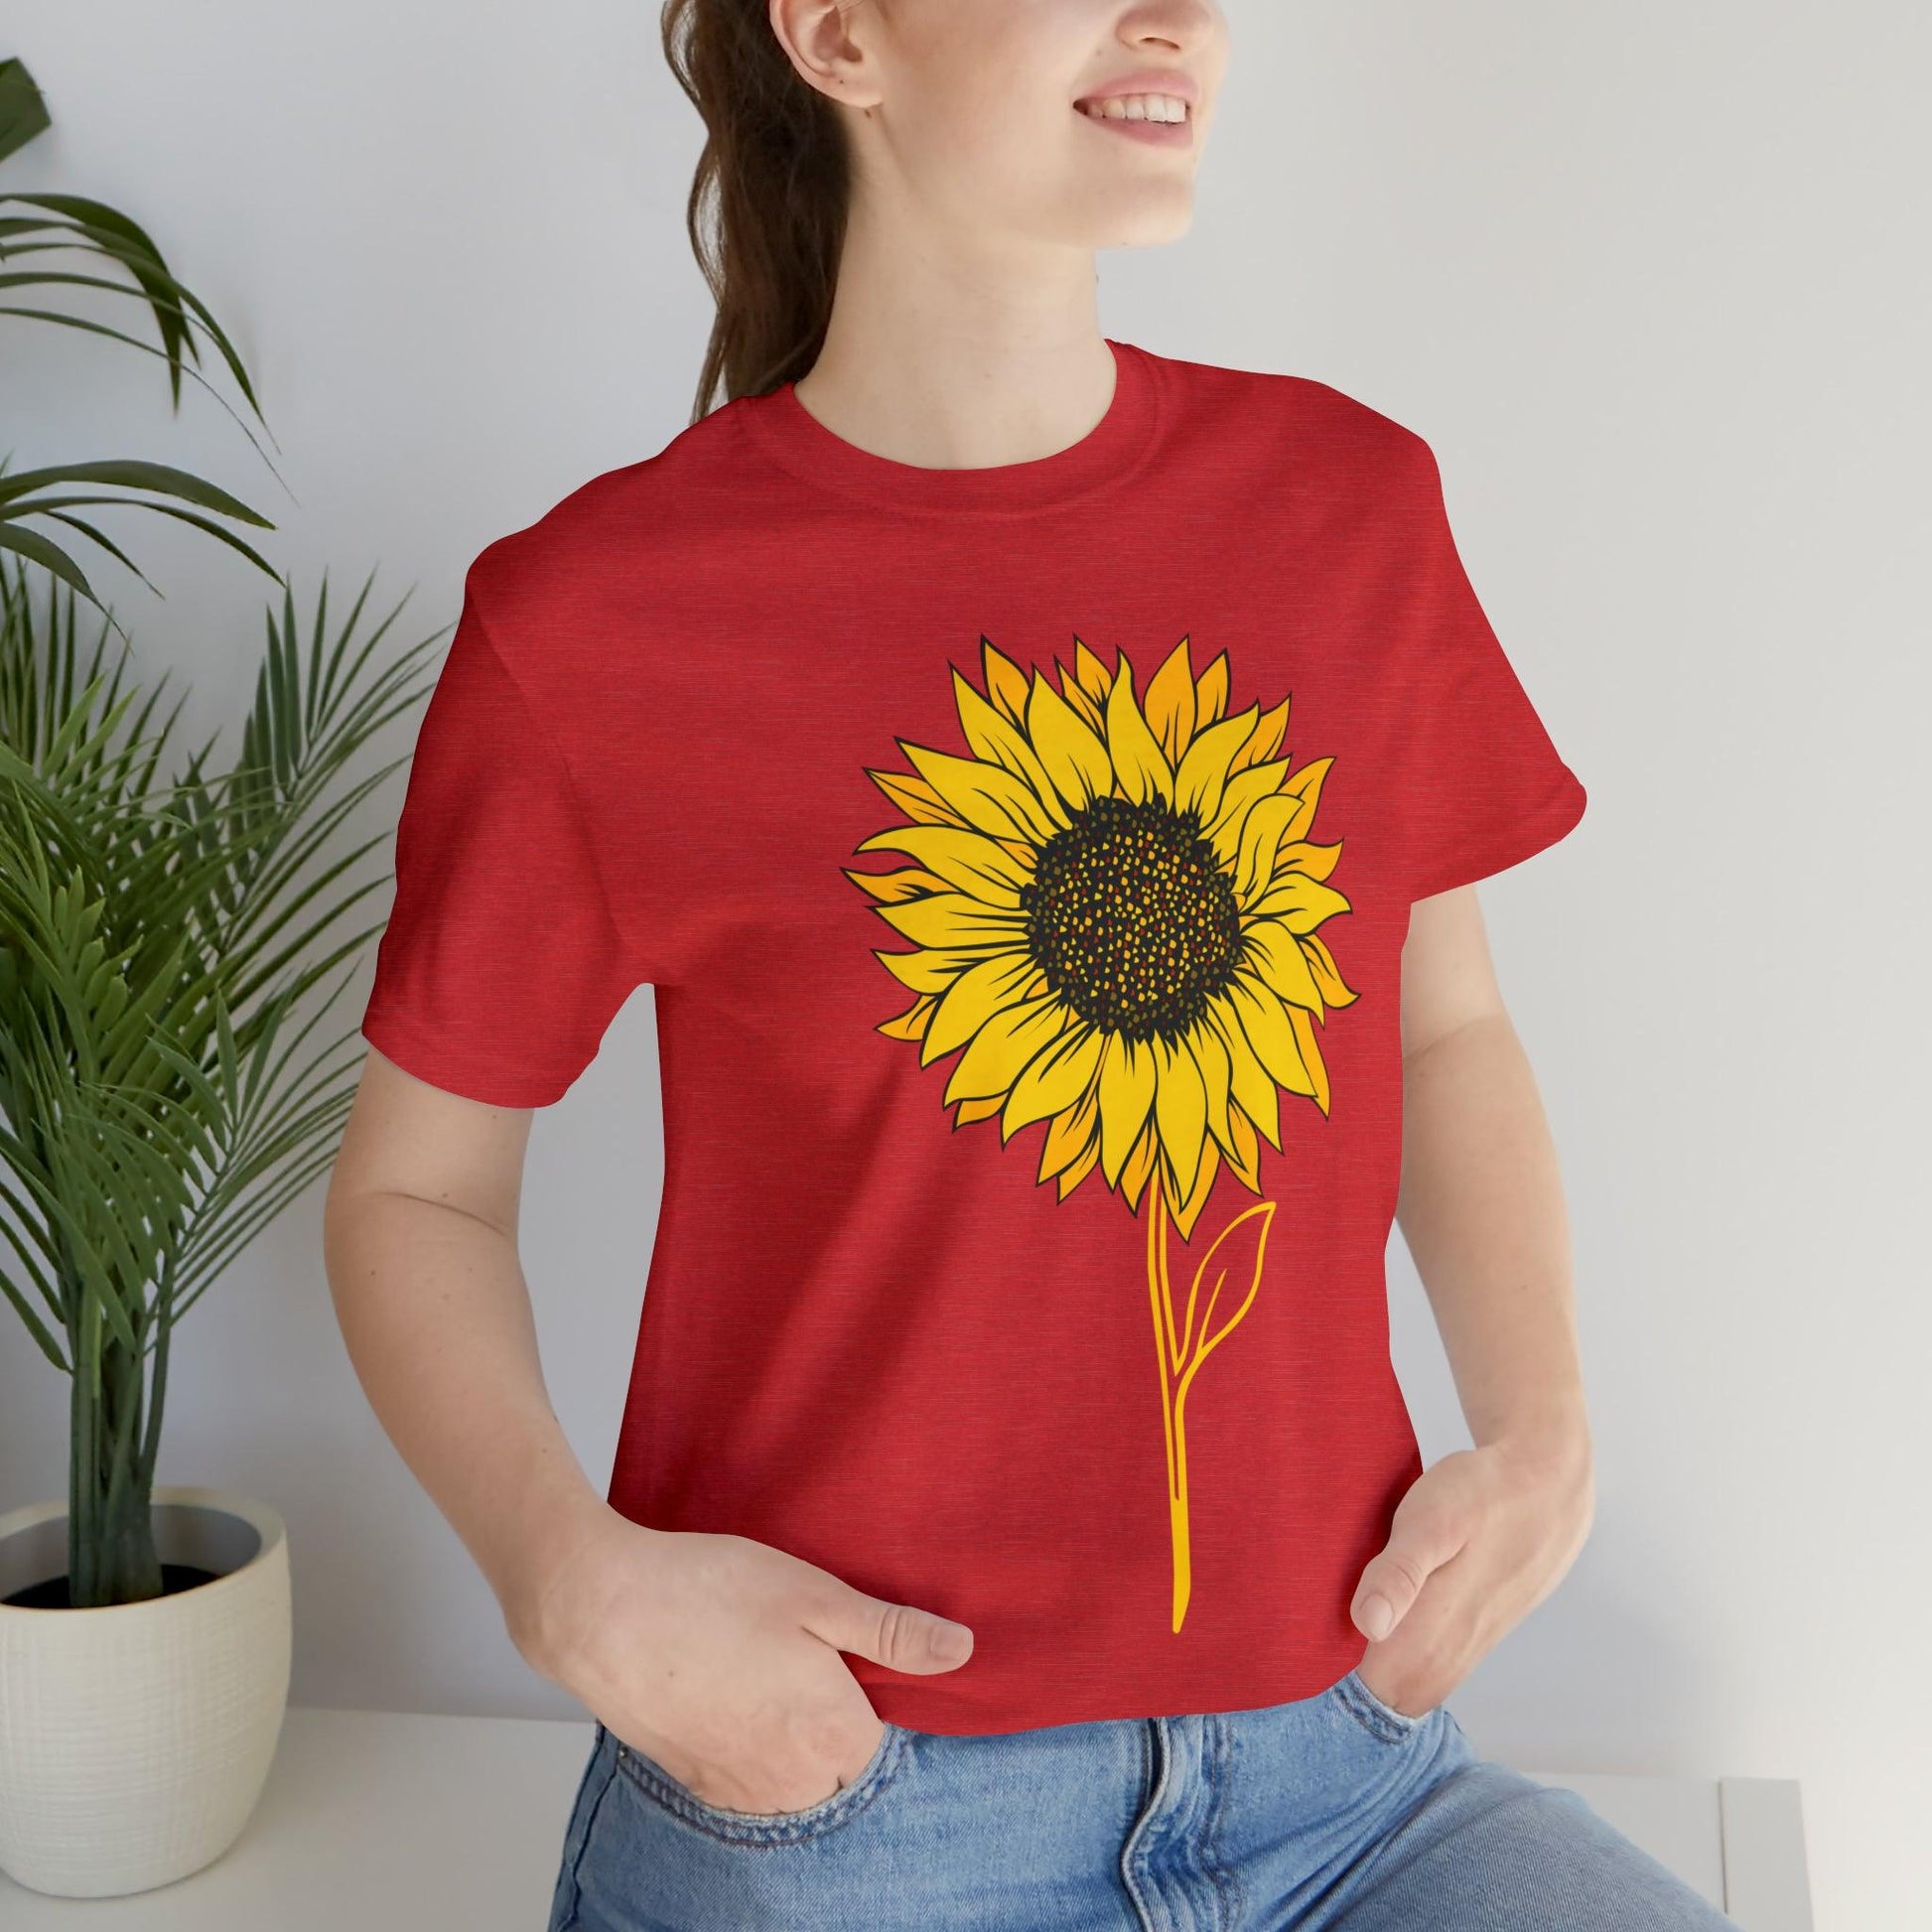 Sunflower Shirt, Floral Tee Shirt, Flower Shirt, Garden Shirt, Womens Fall Summer Shirt Sunshine Tee, Gift for Gardener, Nature love T shirt - Giftsmojo